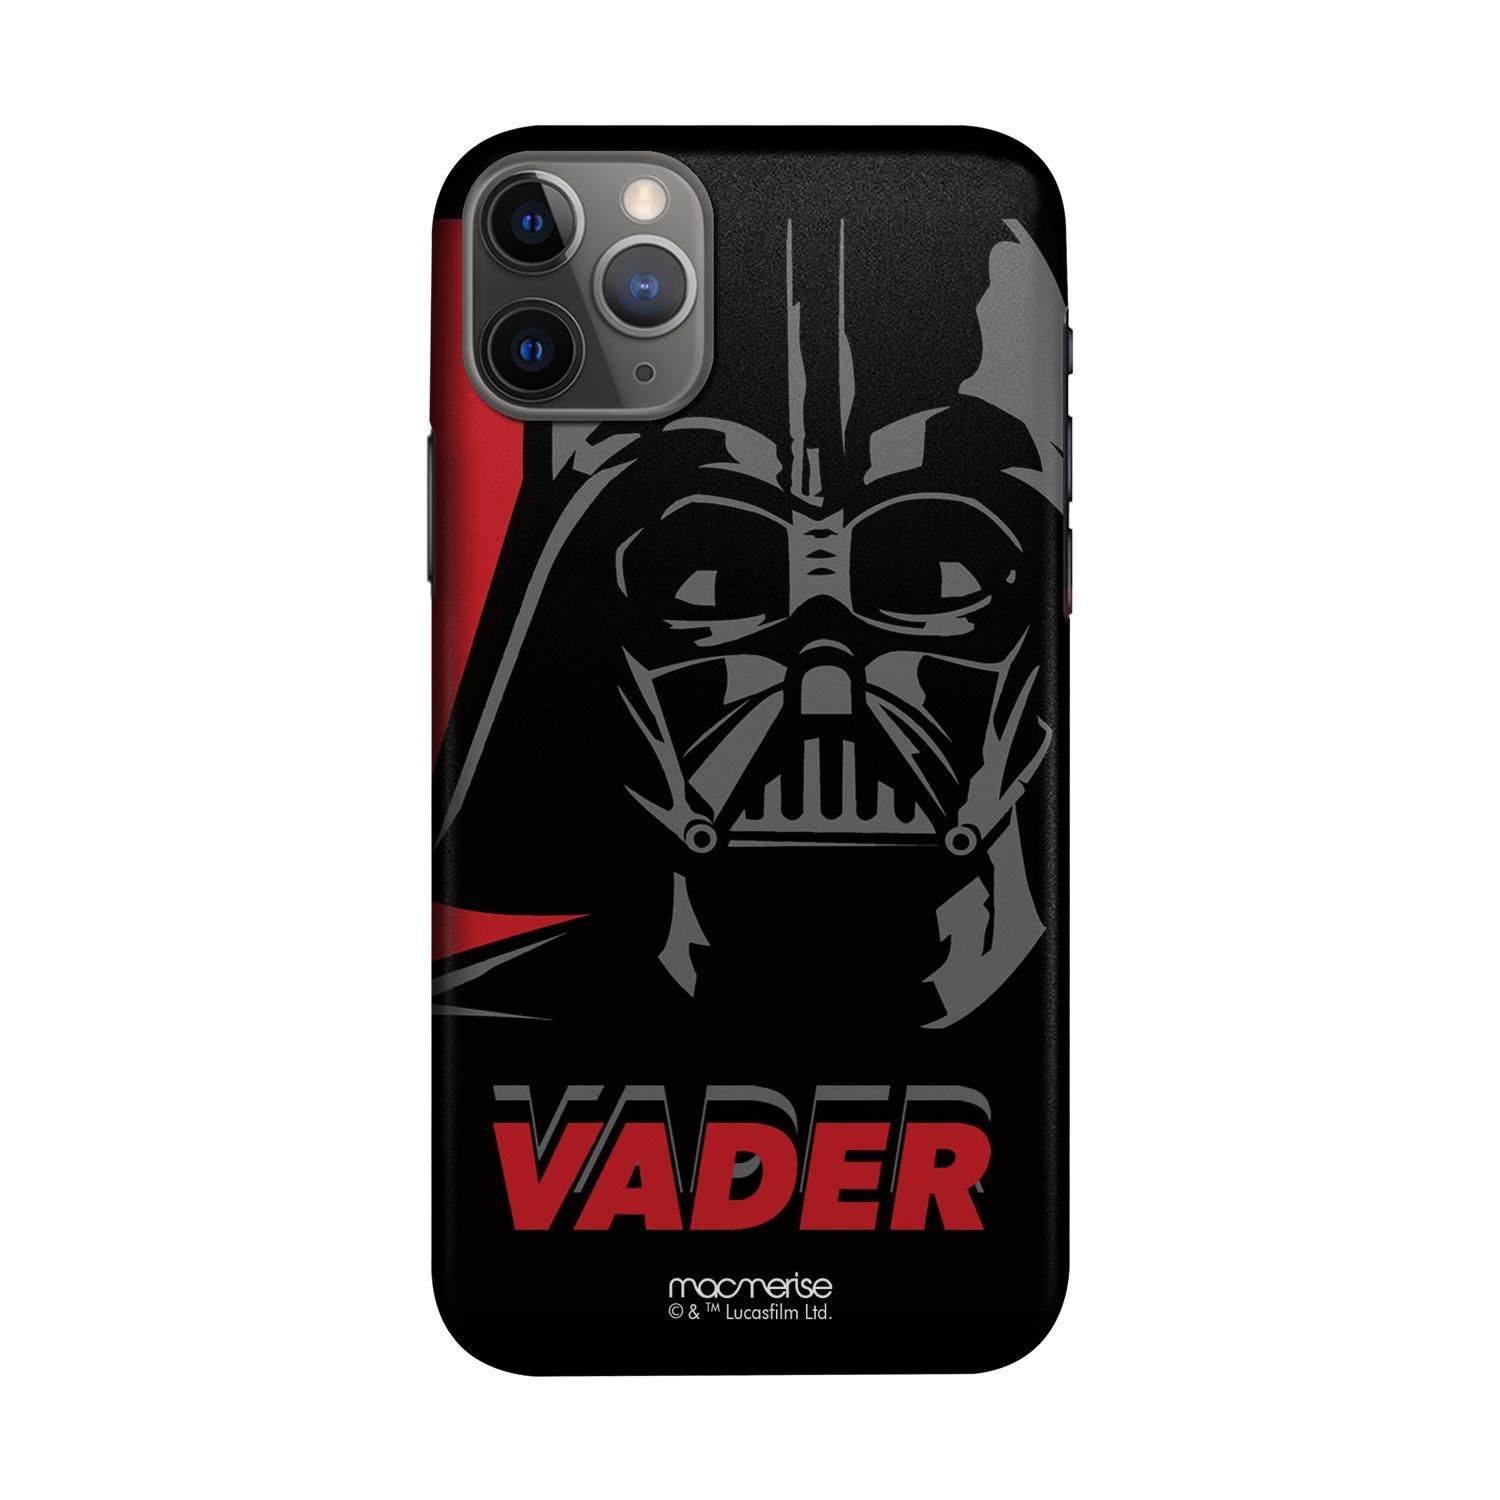 Buy Vader - Sleek Phone Case for iPhone 11 Pro Online